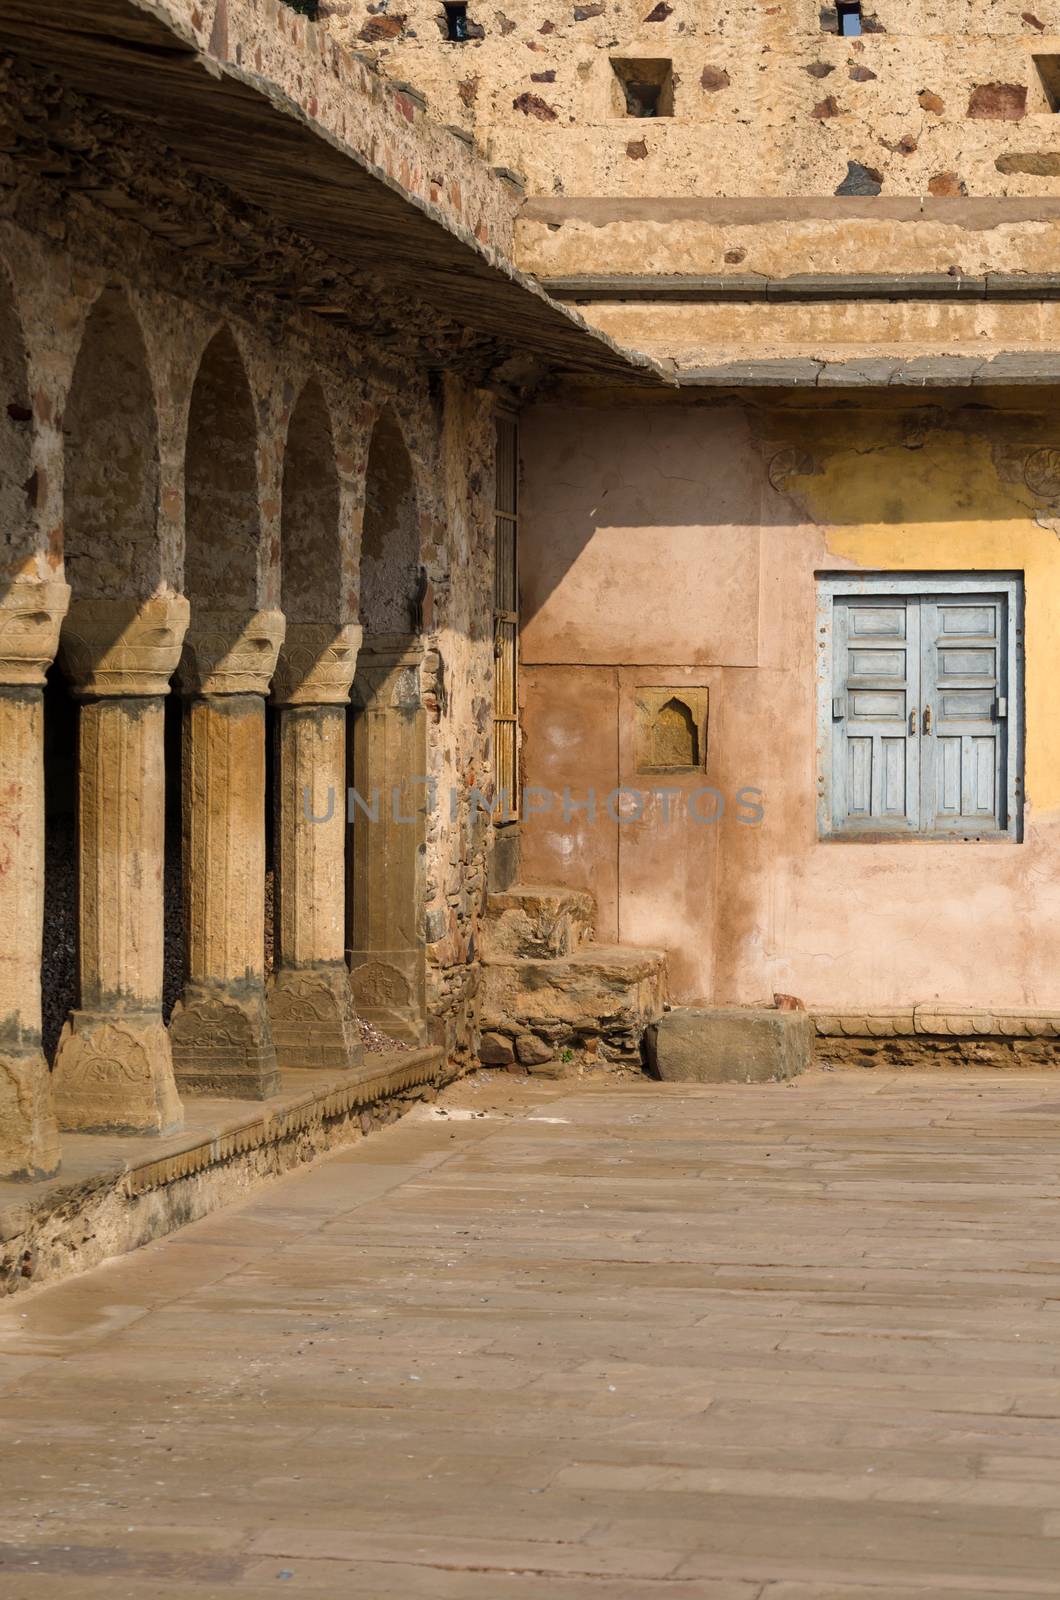 Arcade of Chand Baori Stepwell in Rajasthan by siraanamwong